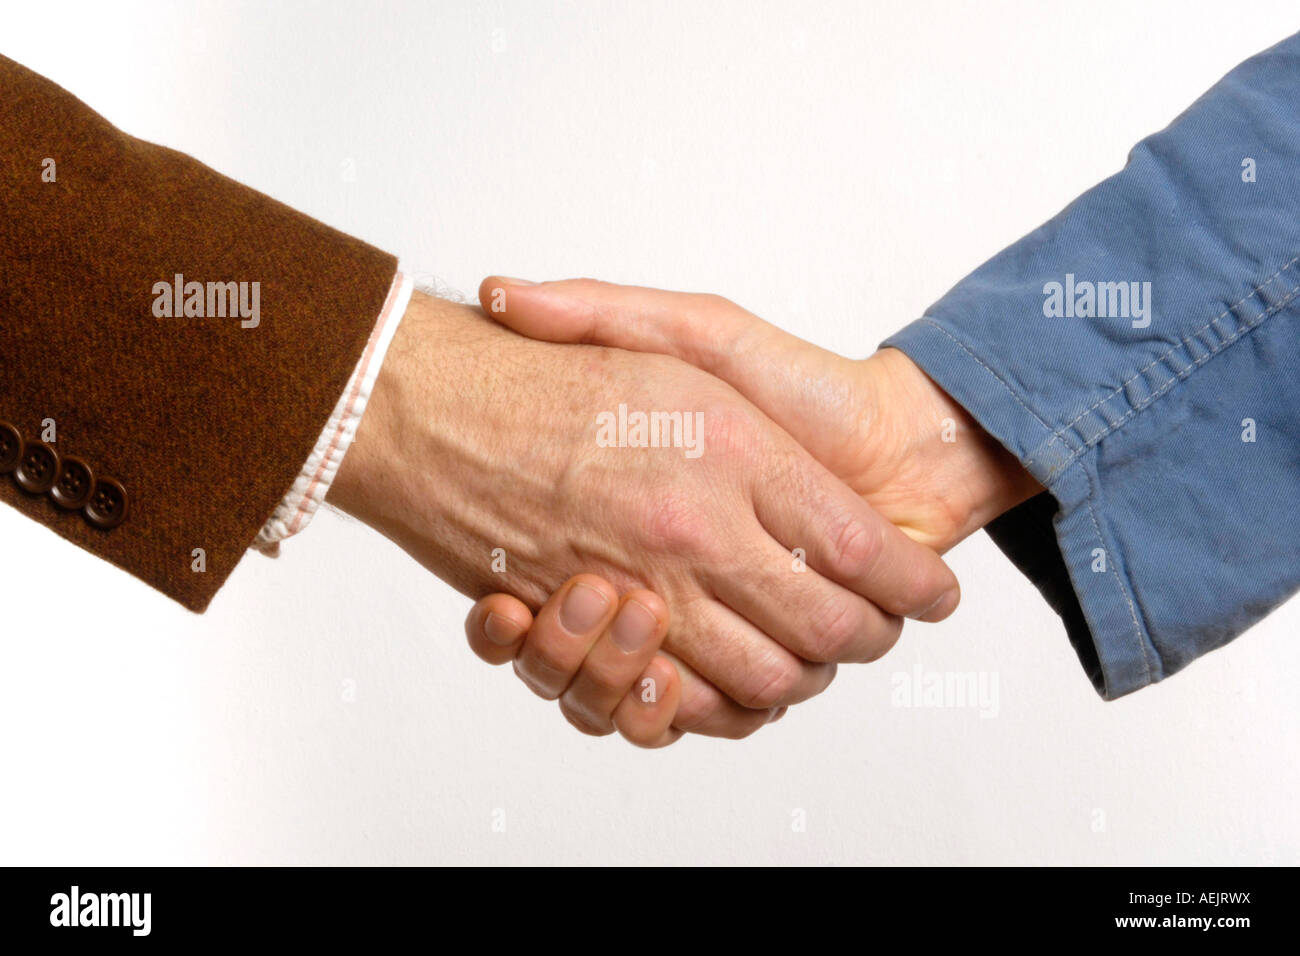 Handshake, employee - employer Stock Photo